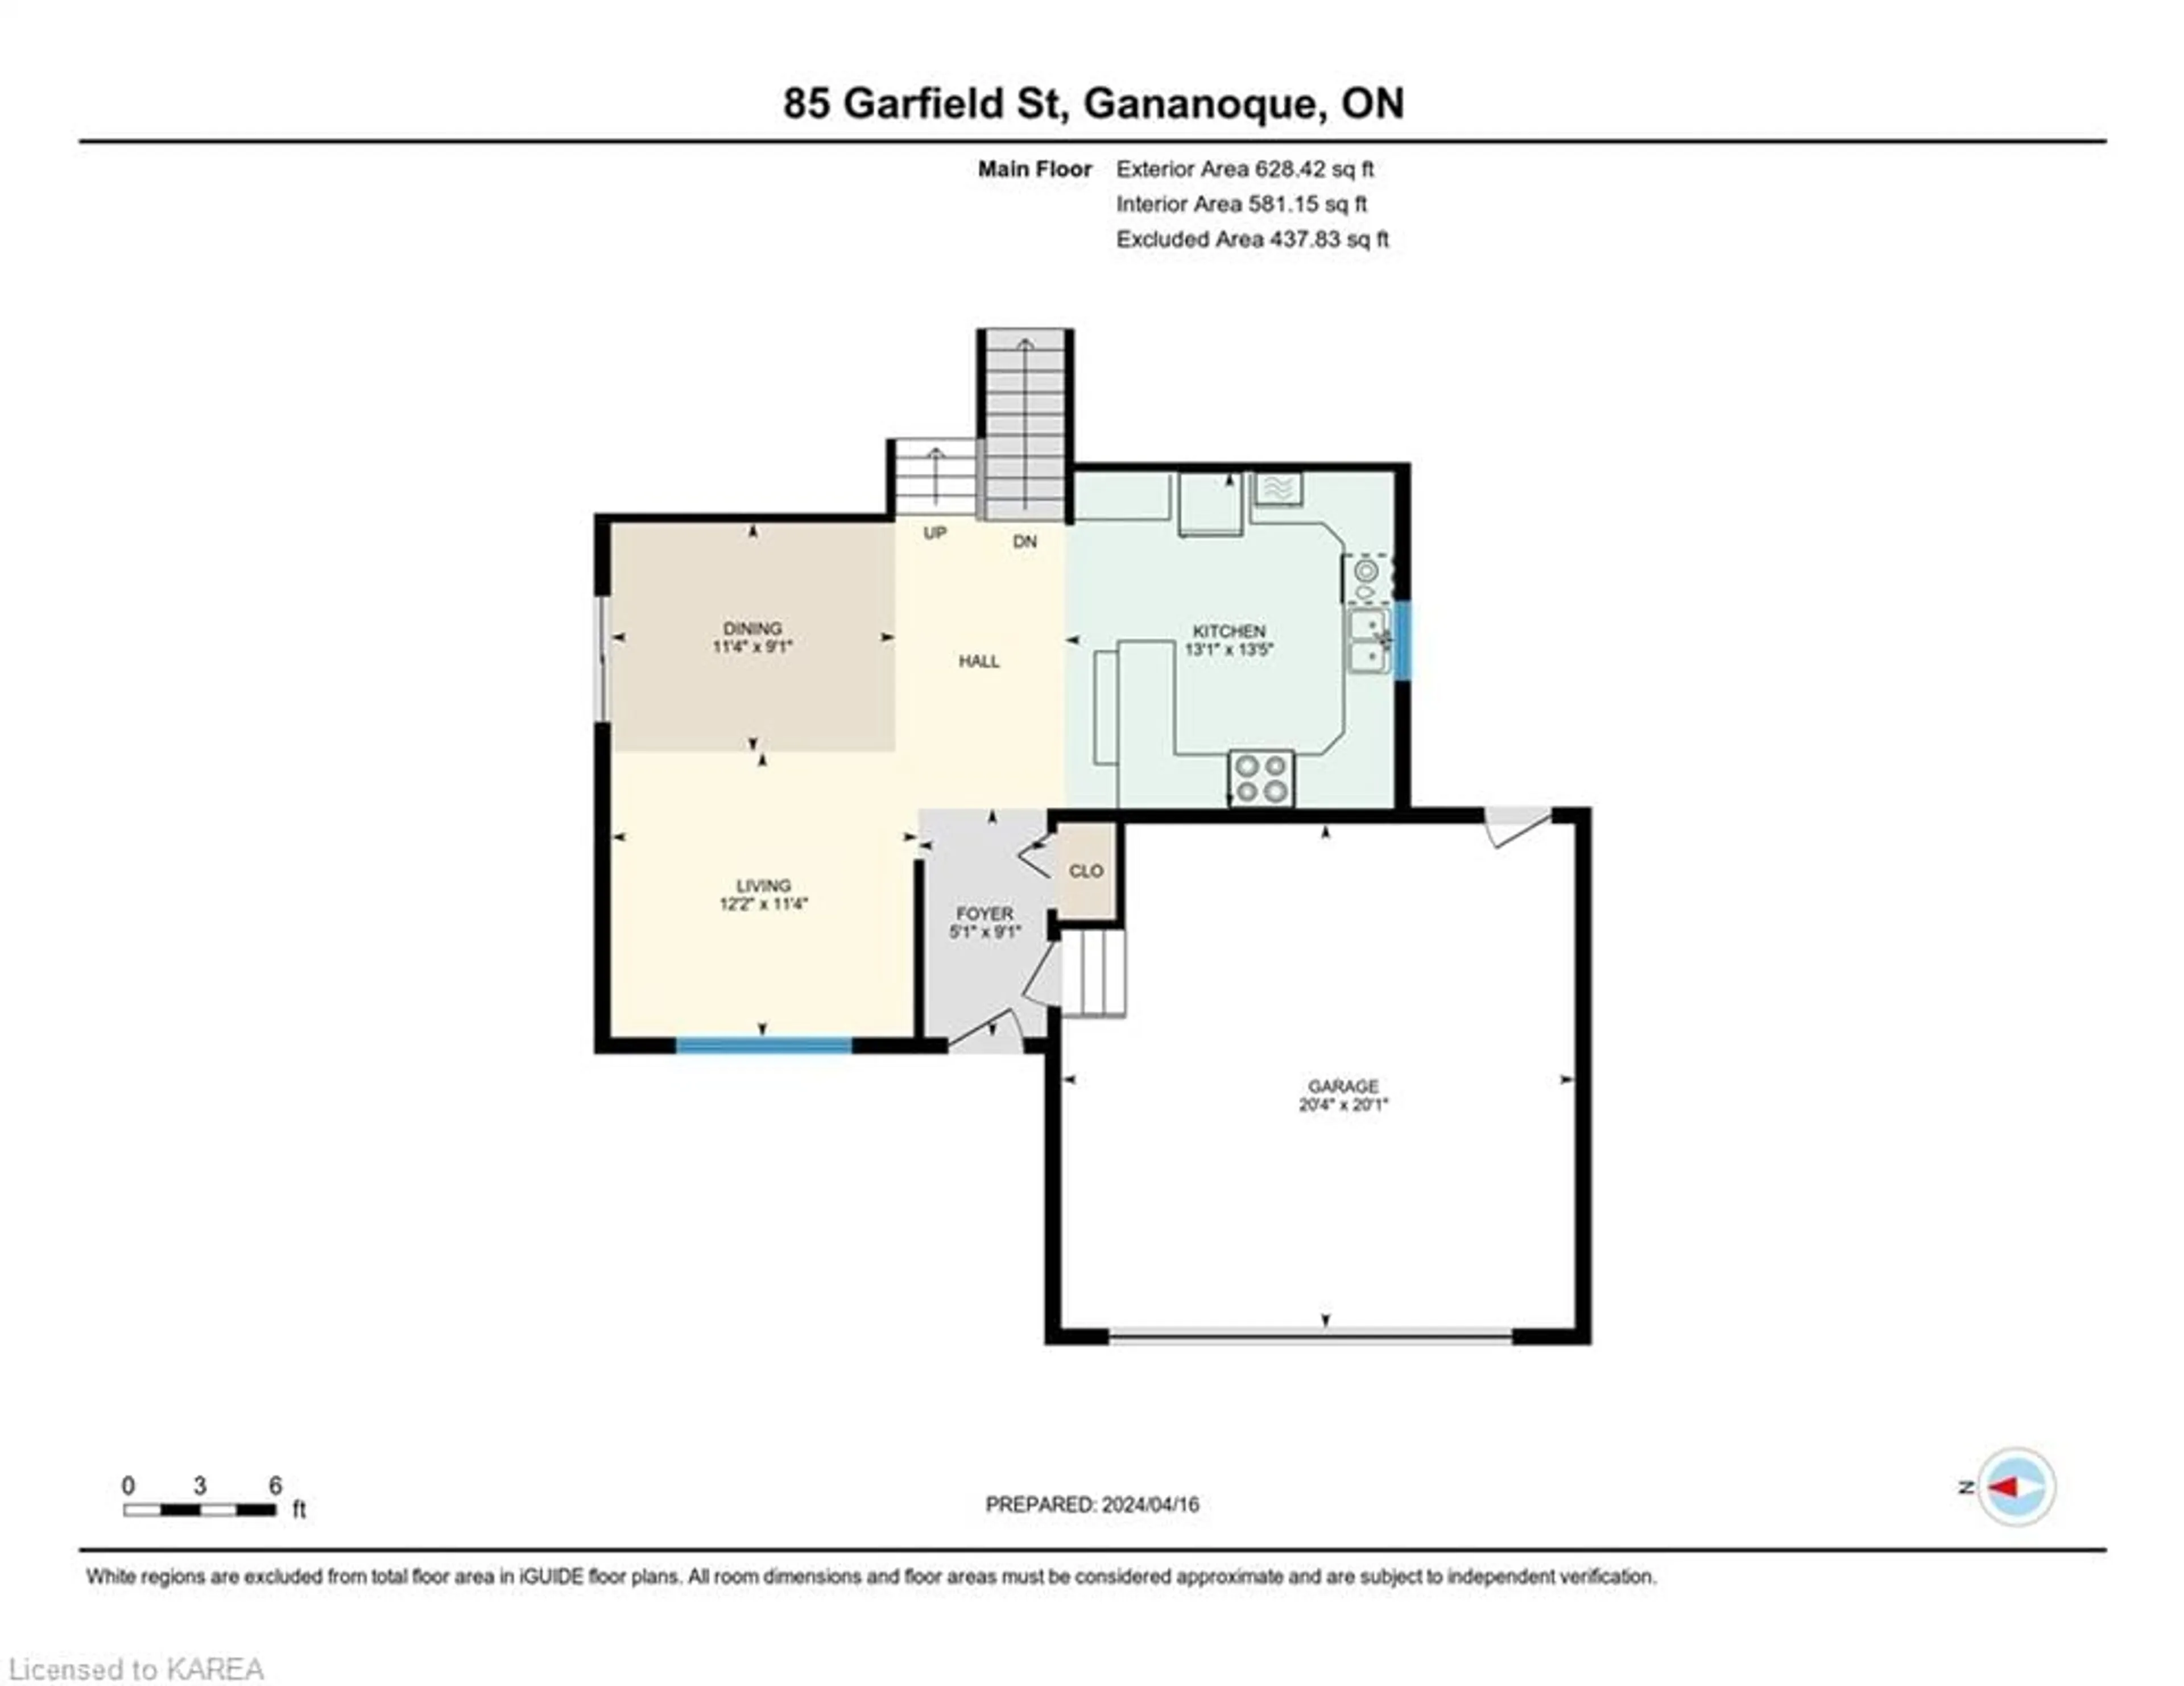 Floor plan for 85 Garfield St, Gananoque Ontario K7G 3G2